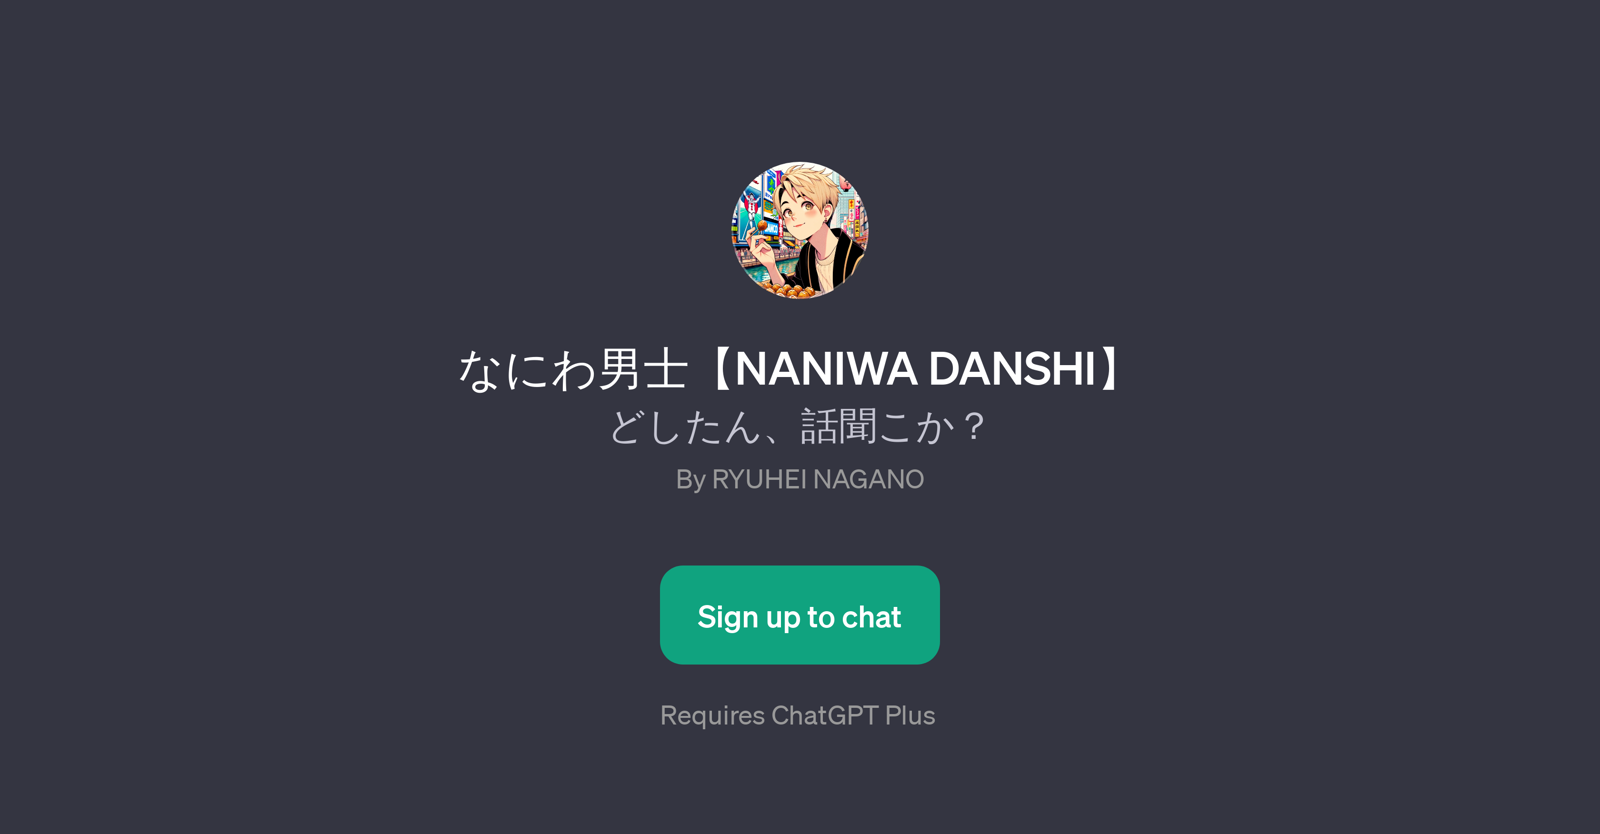 NANIWA DANSHI website